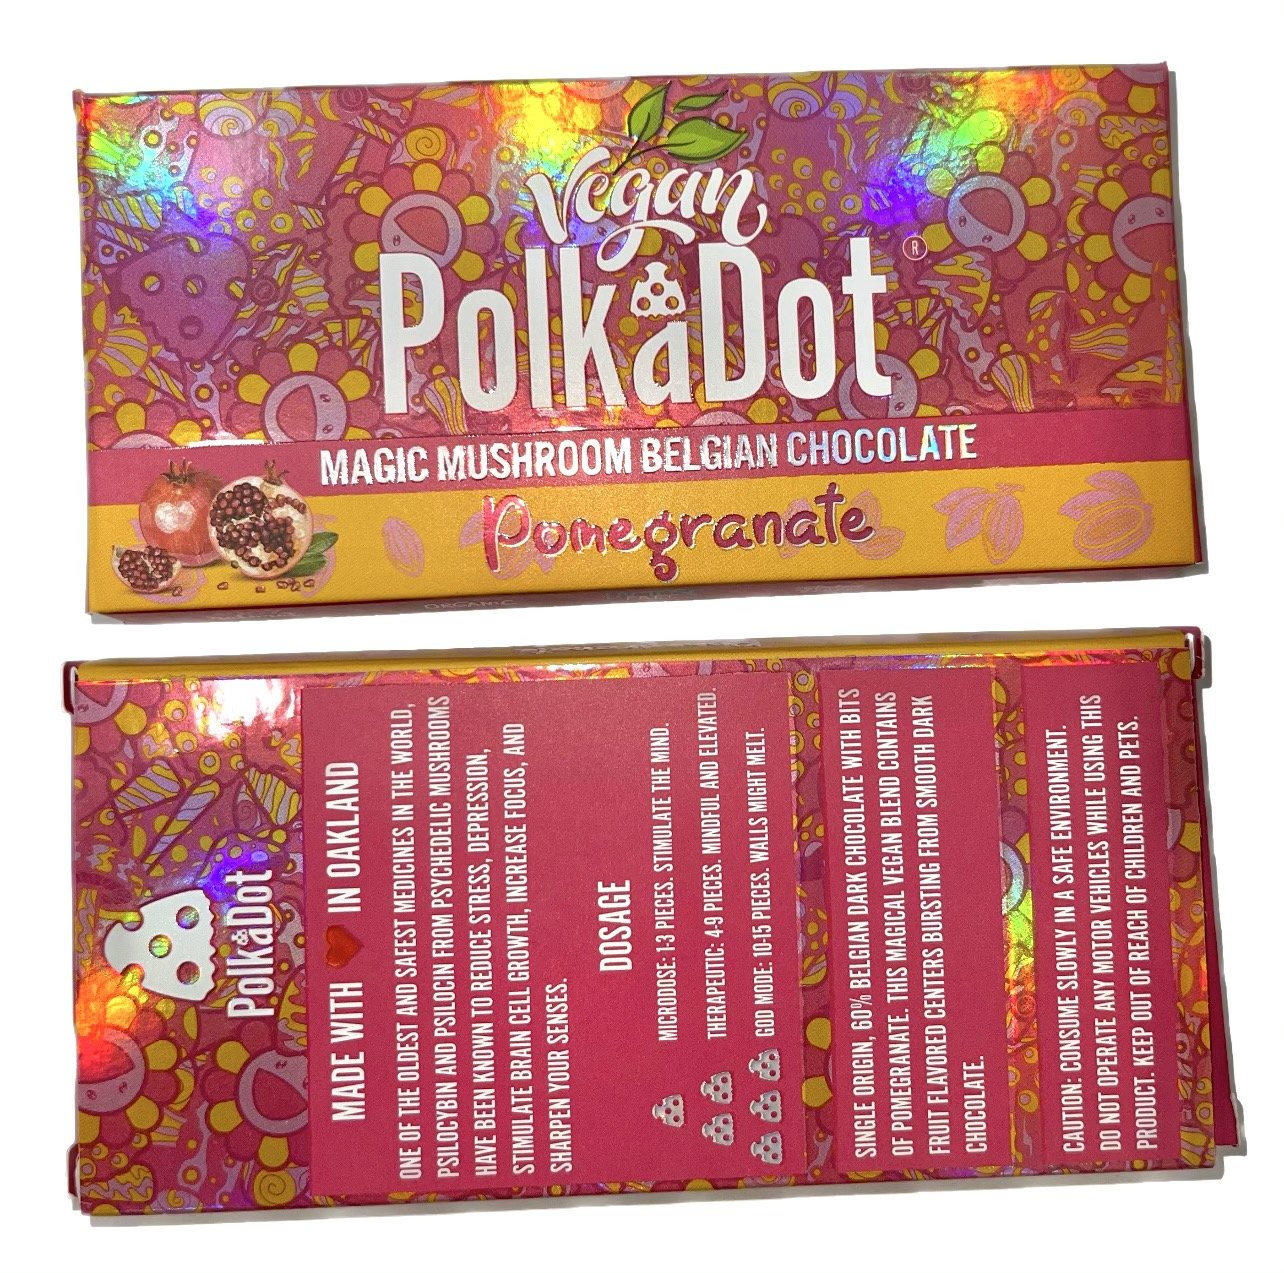 Polkadot Chocolate Bars For Sale Polka Dot Mushroom Chocolate Dc 5511